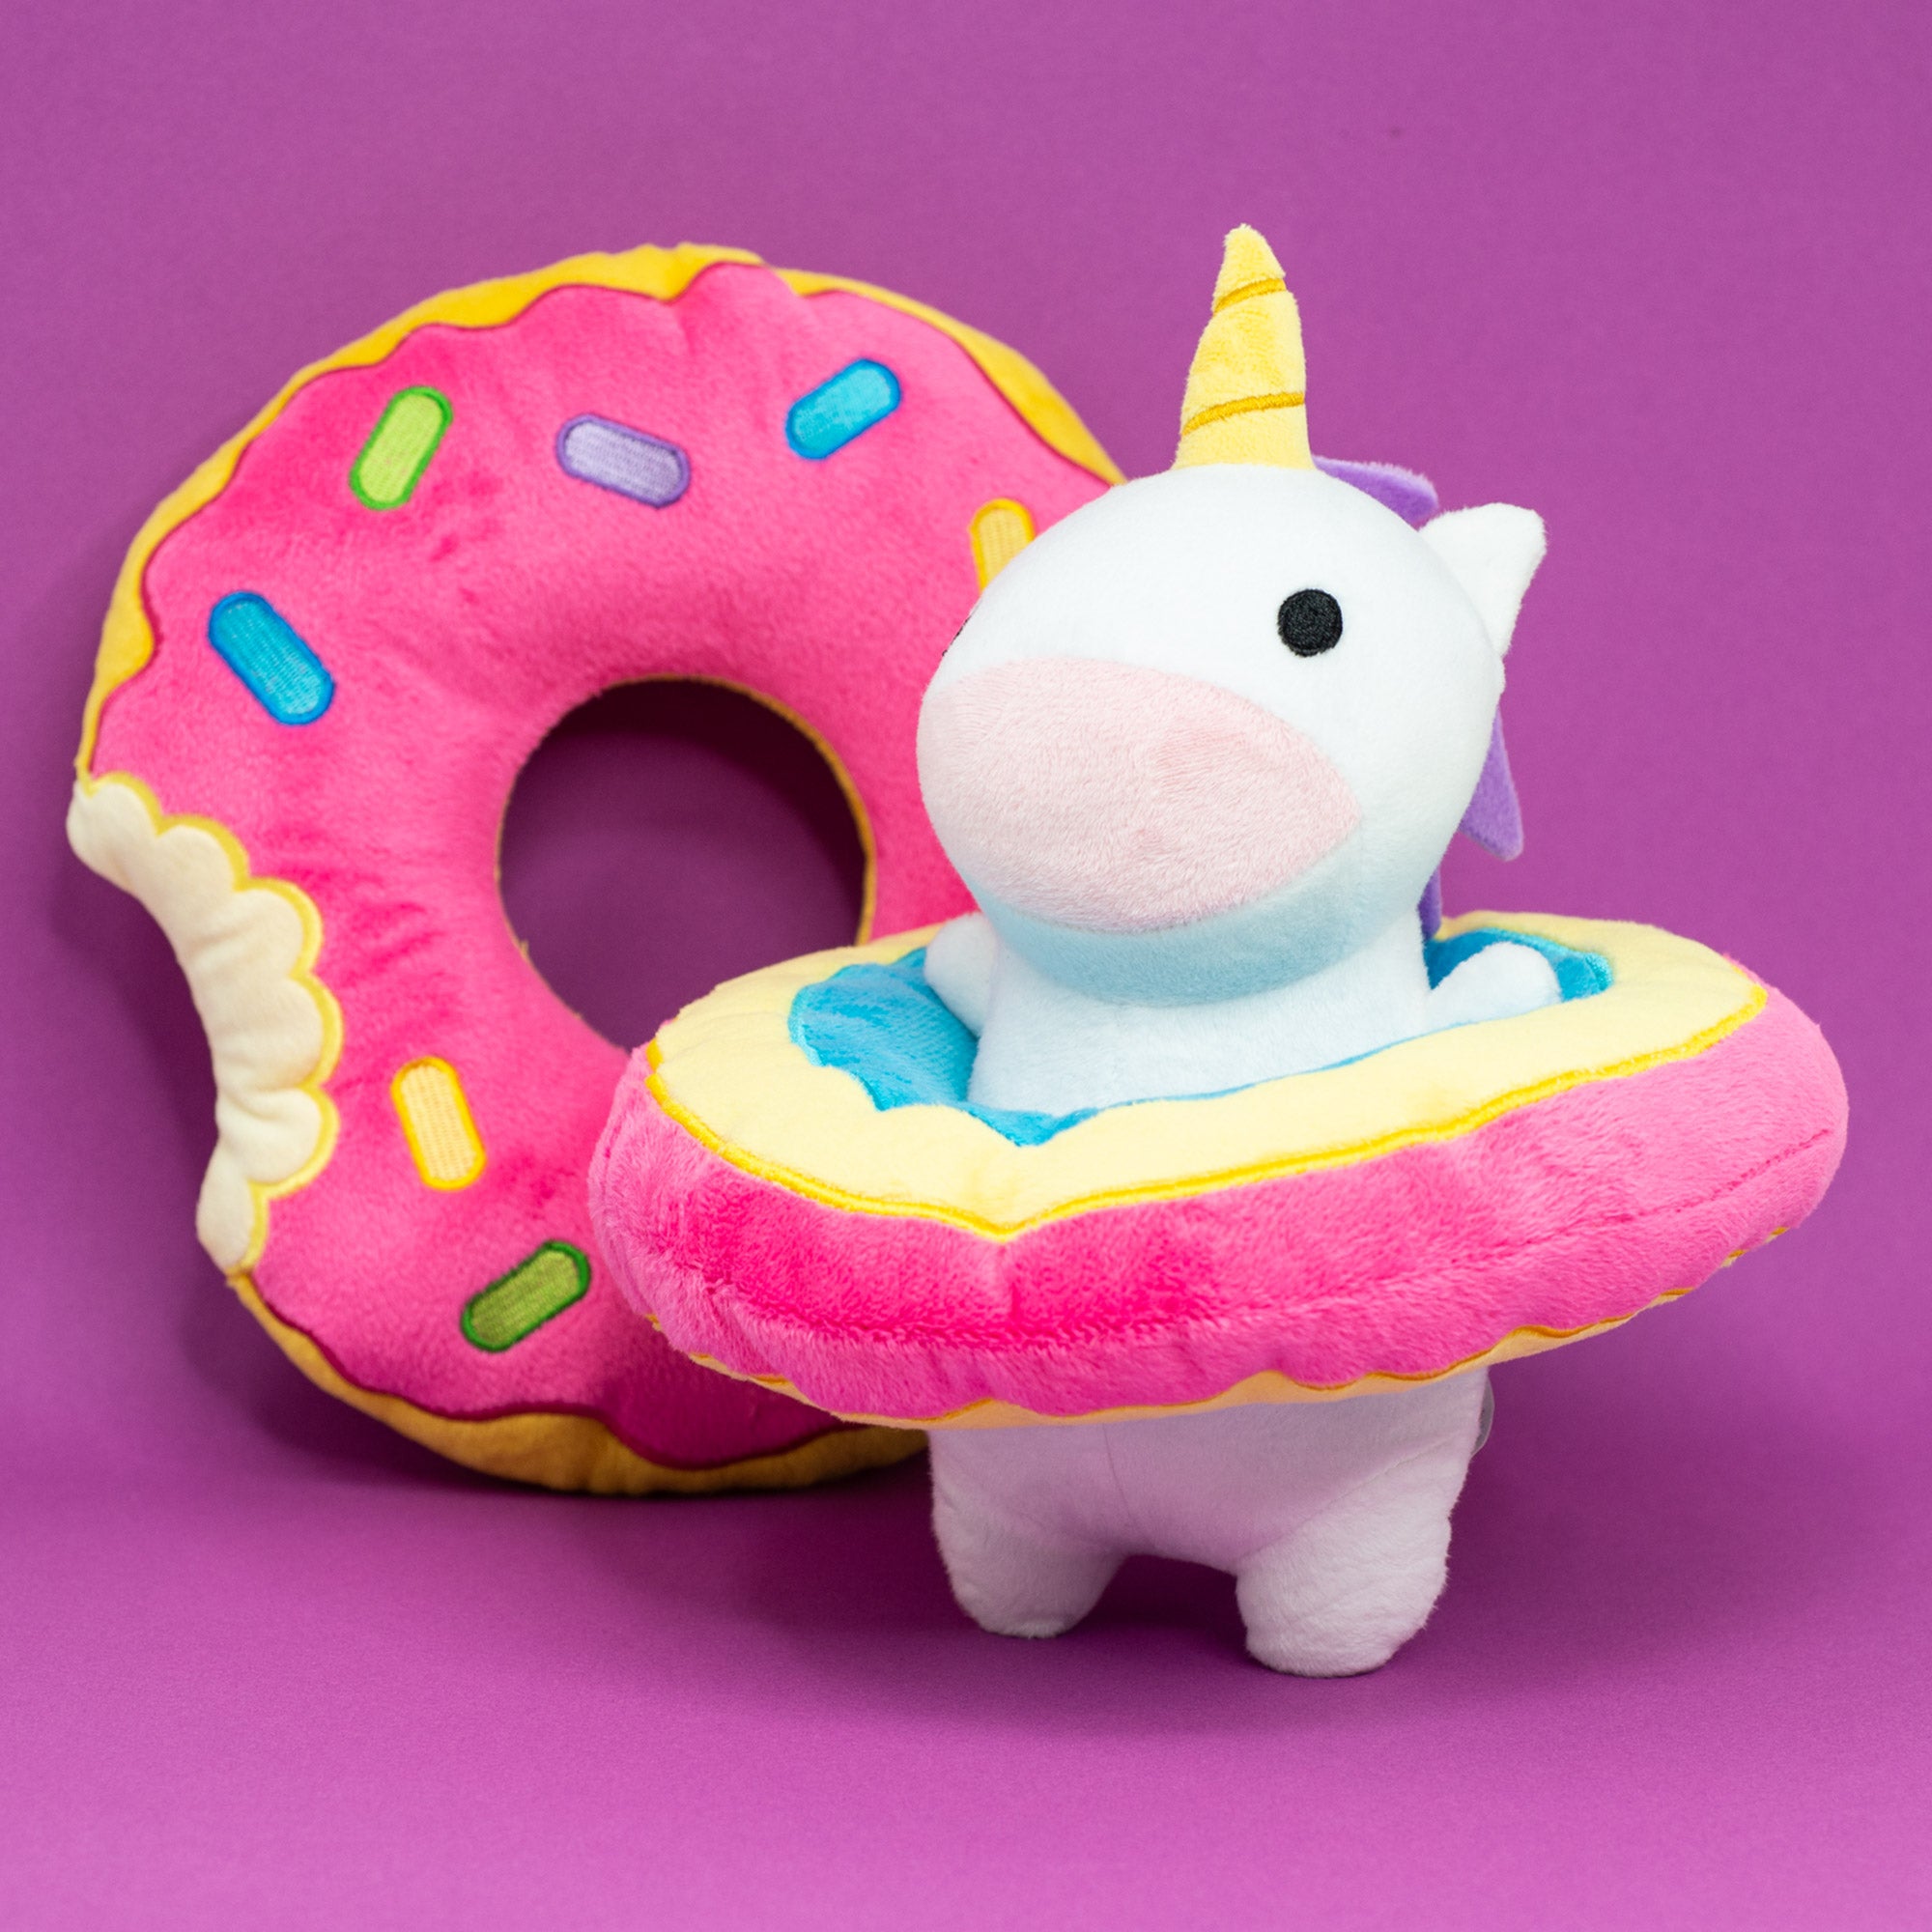 where can i buy a unicorn stuffed animal